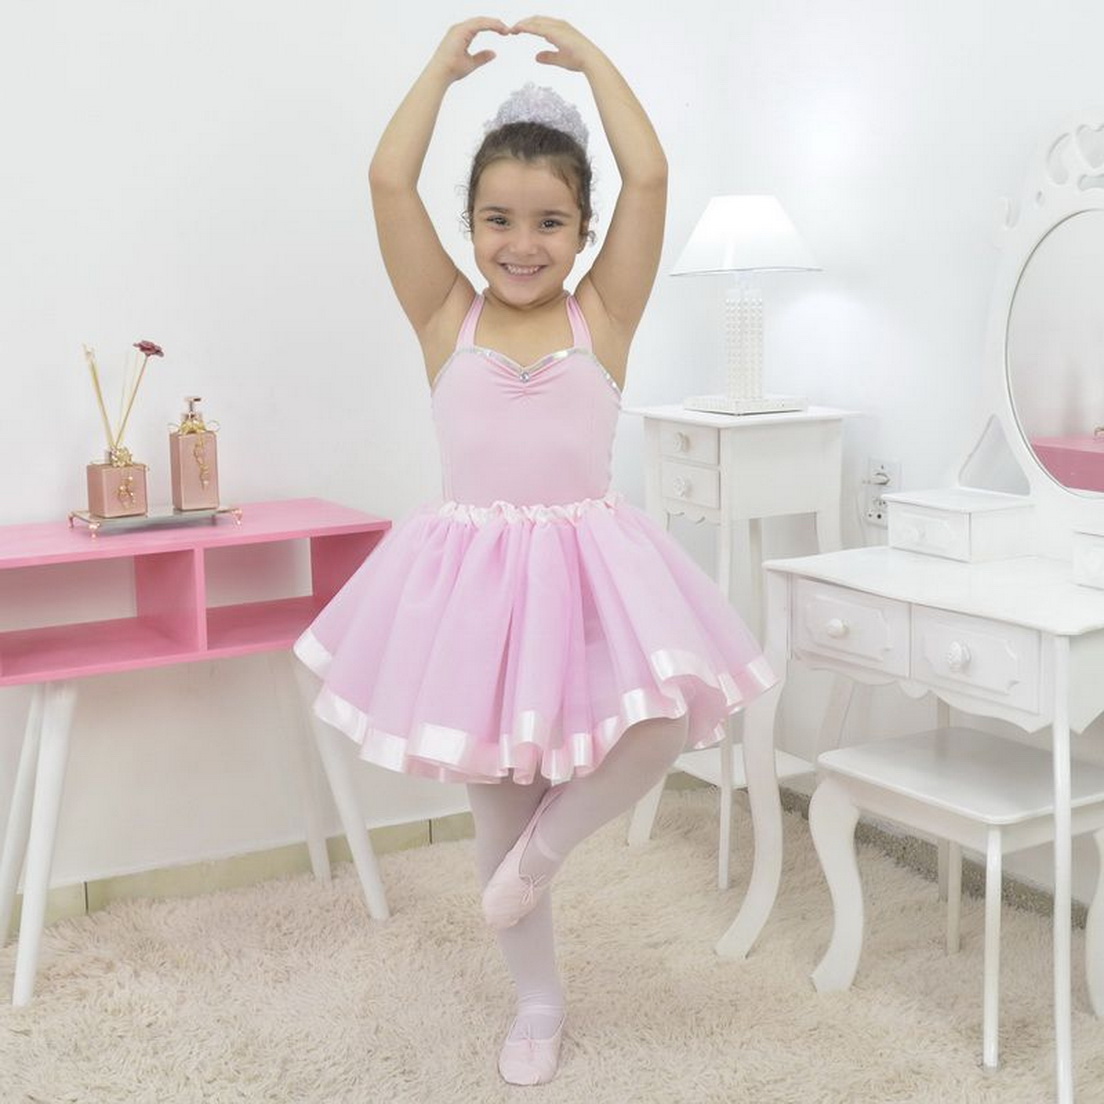 Vestido de Bailarina rosa - Conjunto Ballet completo com sapatilha